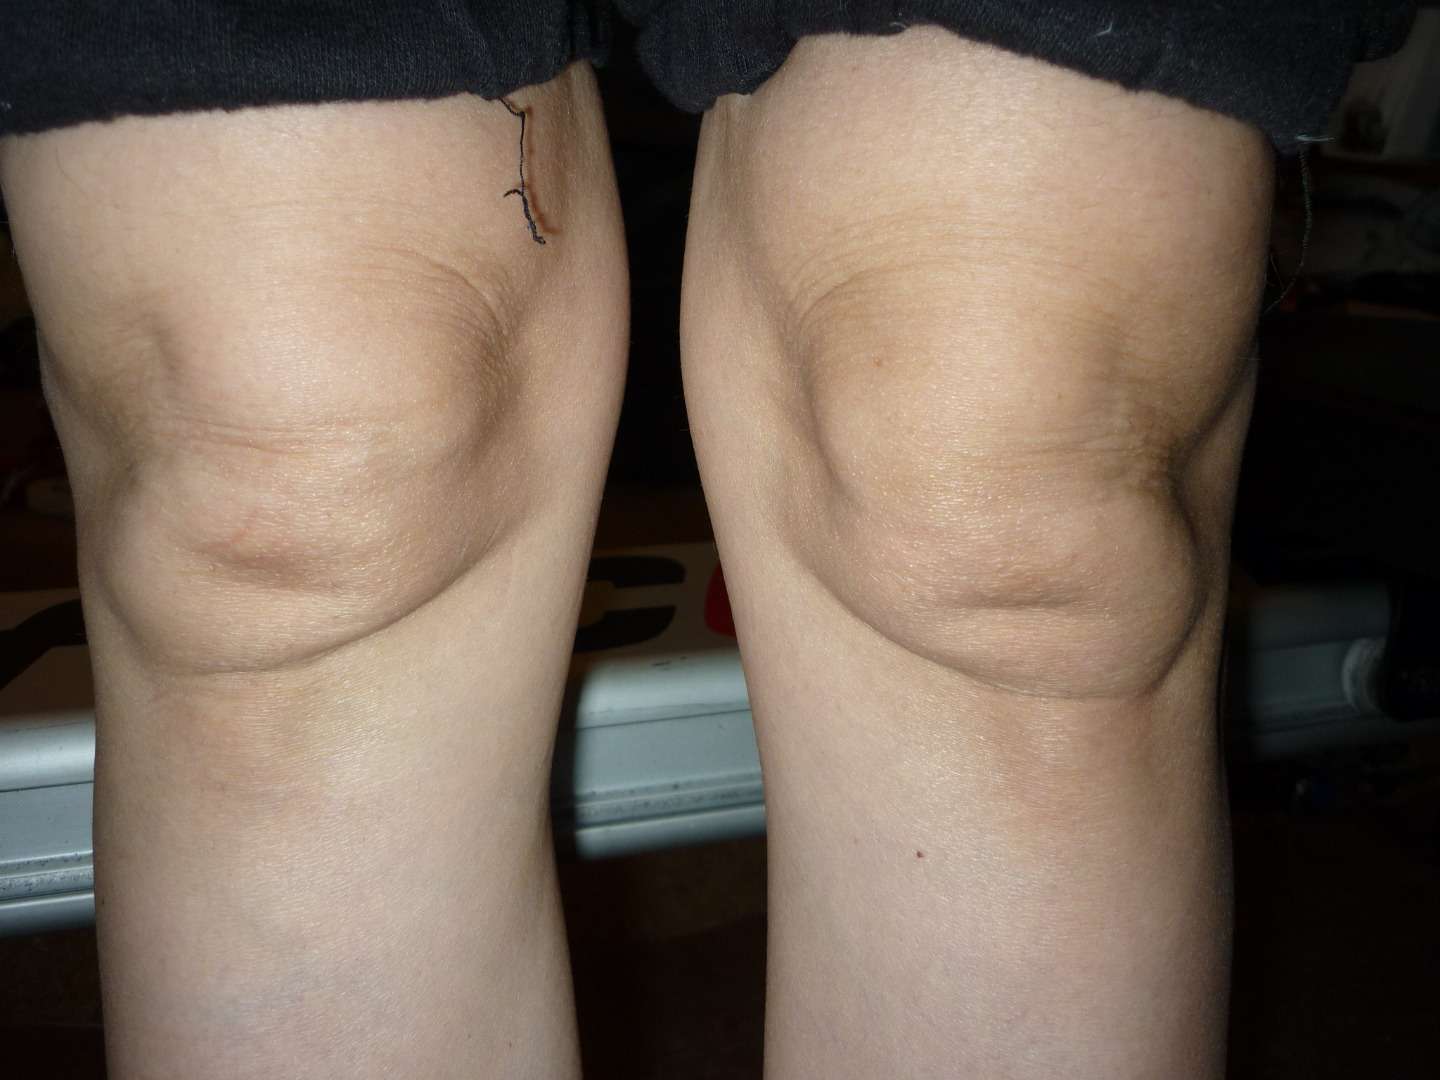 Fleshy, painless lump below knee caps